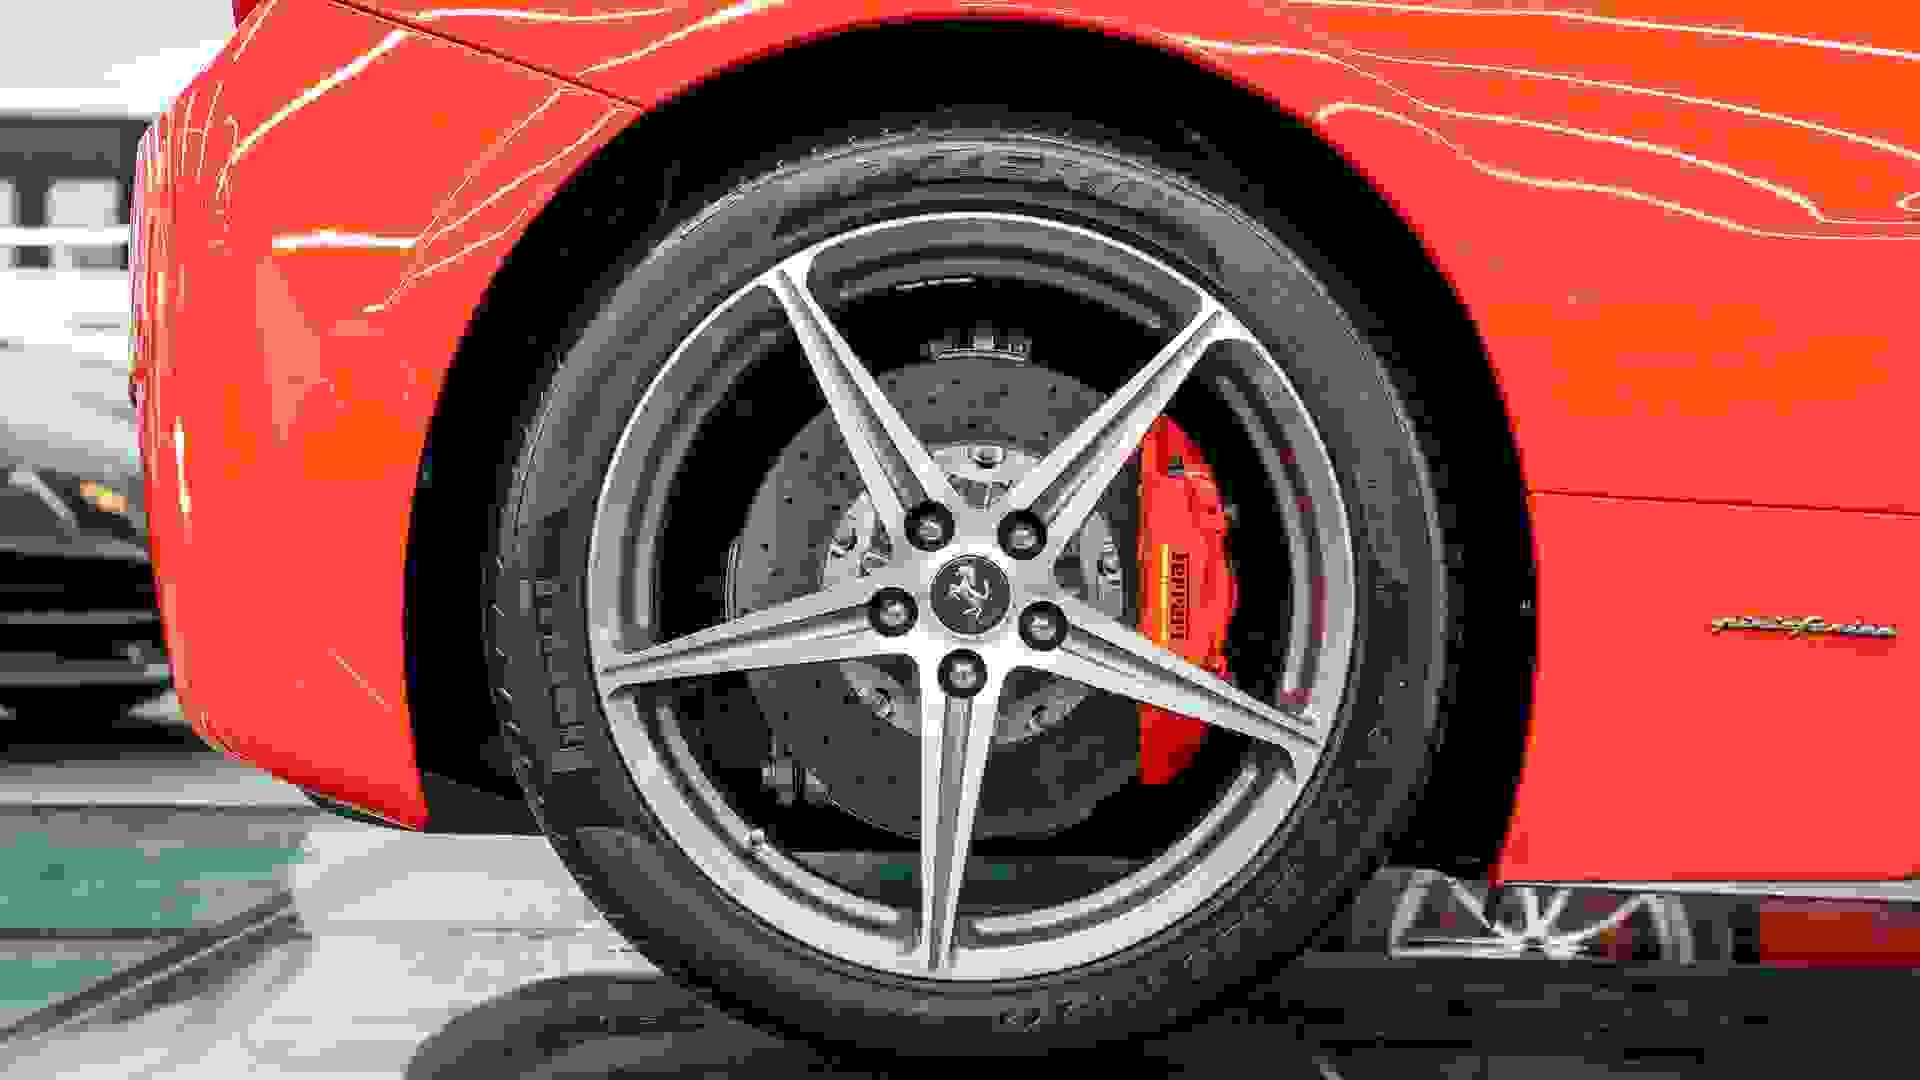 Ferrari 458 Photo 7e1e6d88-947b-4744-8d2f-b8ed9cfc77e9.jpg